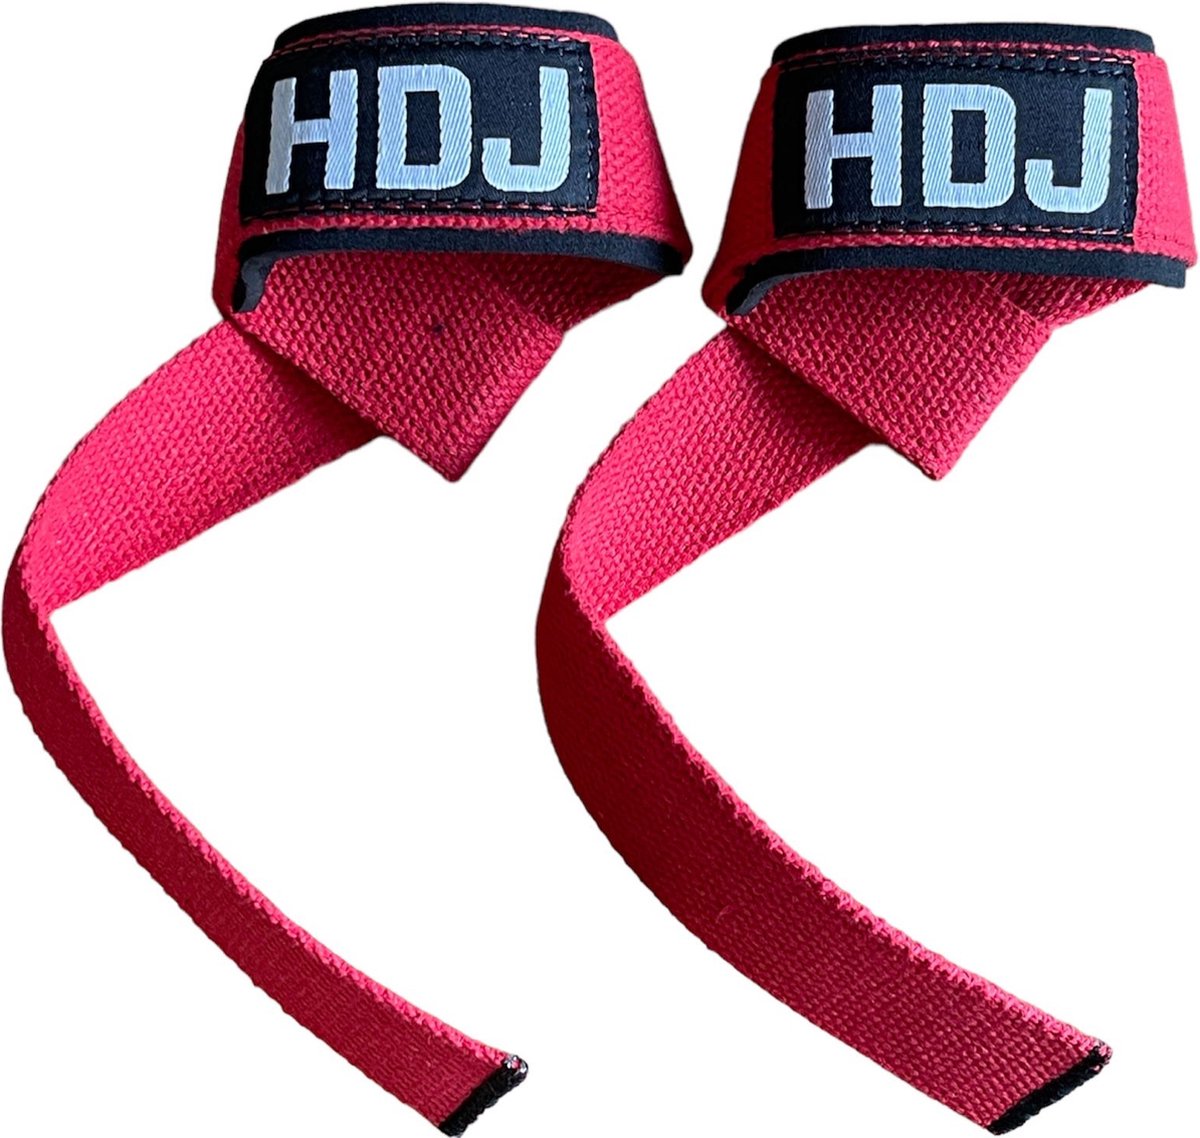 HDJ Lifting Straps Rood - Krachttraining Accessoires - Powerlifting - Bodybuilding - Fitness - Wrist Wraps - Gym Straps